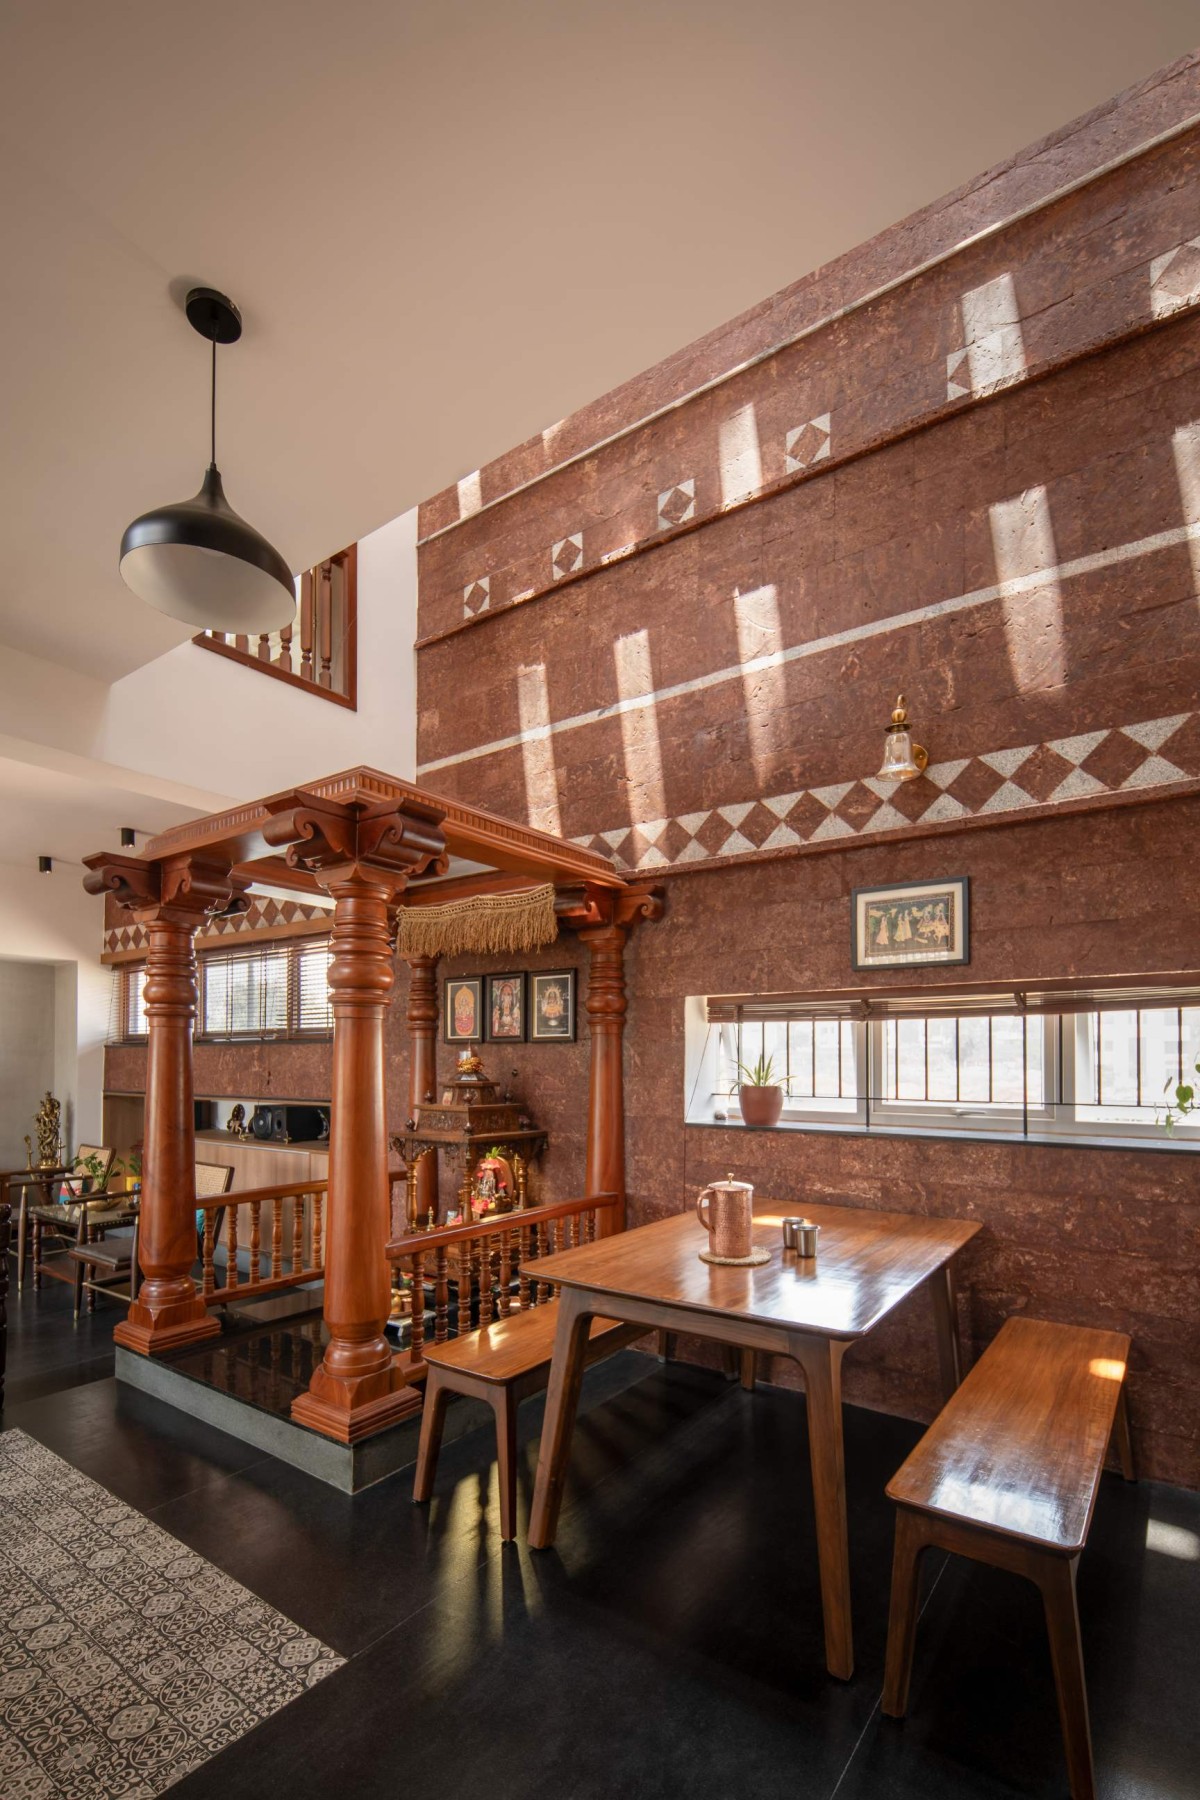 Dining of Brindavana Residence by Veerajshet Design Studio